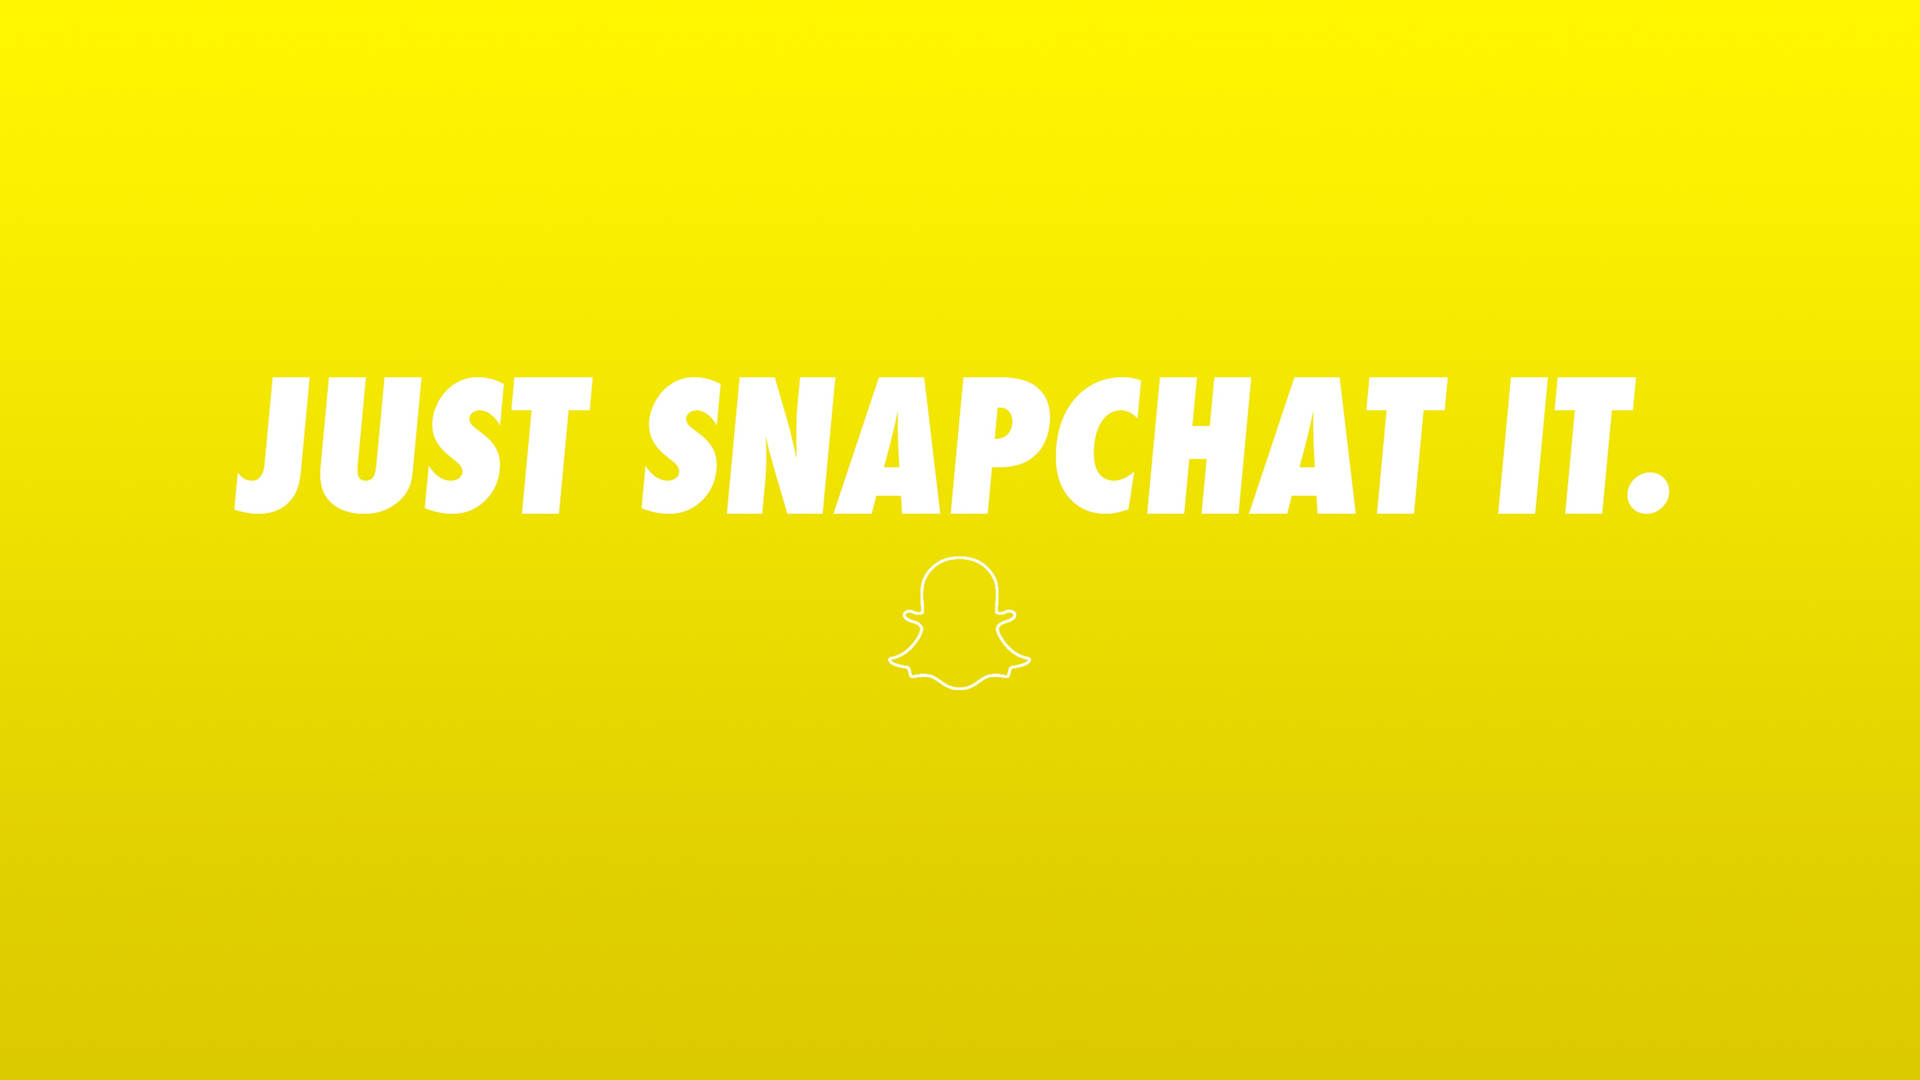 Top 999+ Snapchat Wallpaper Full HD, 4K✅Free to Use